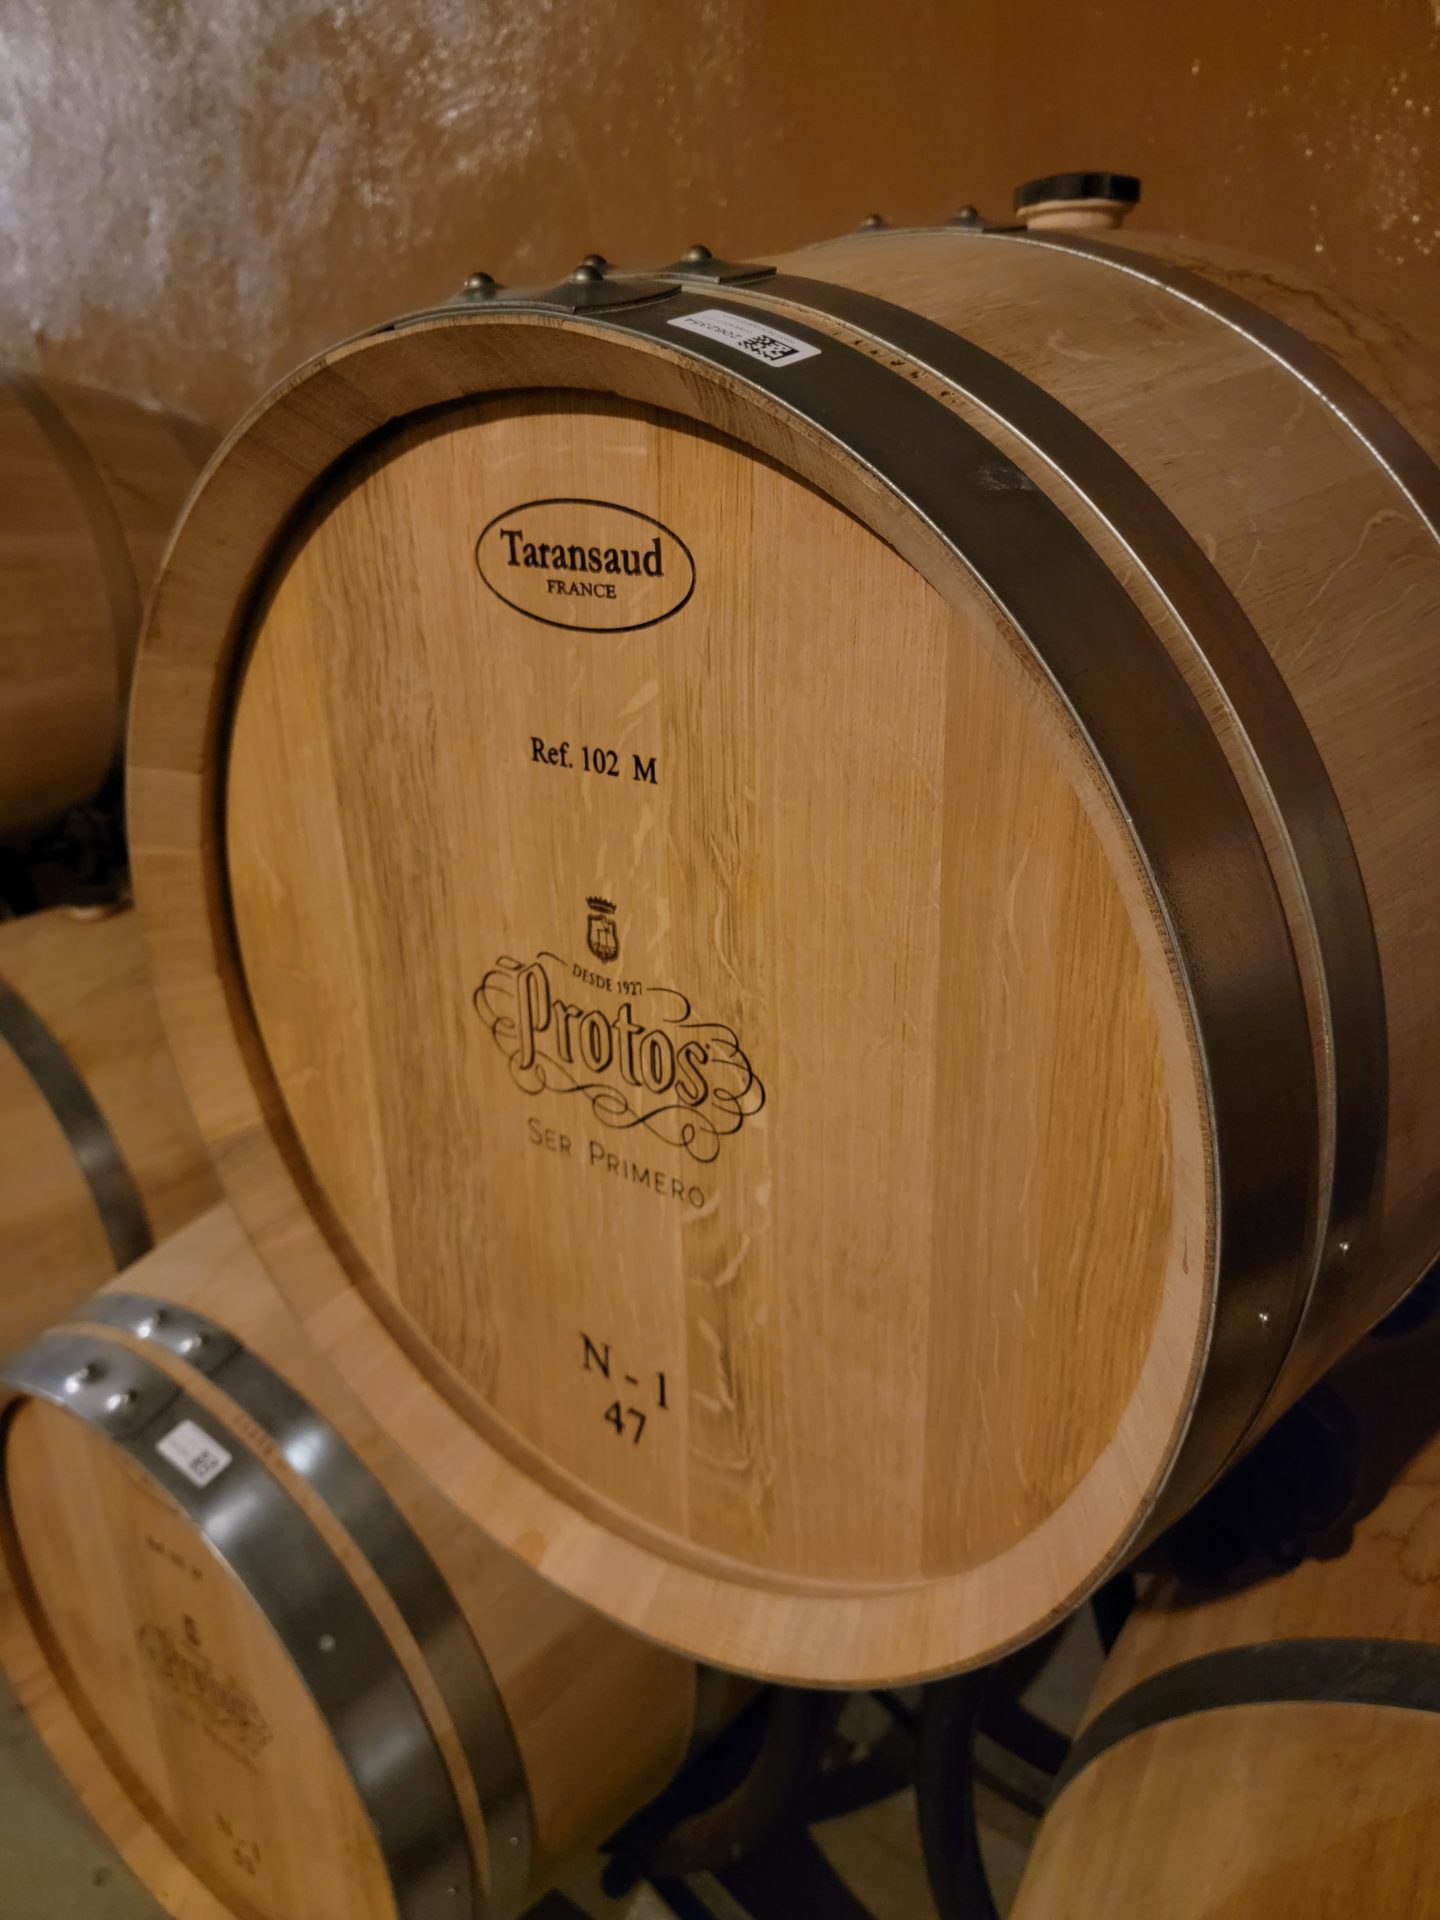 a group of wooden barrels